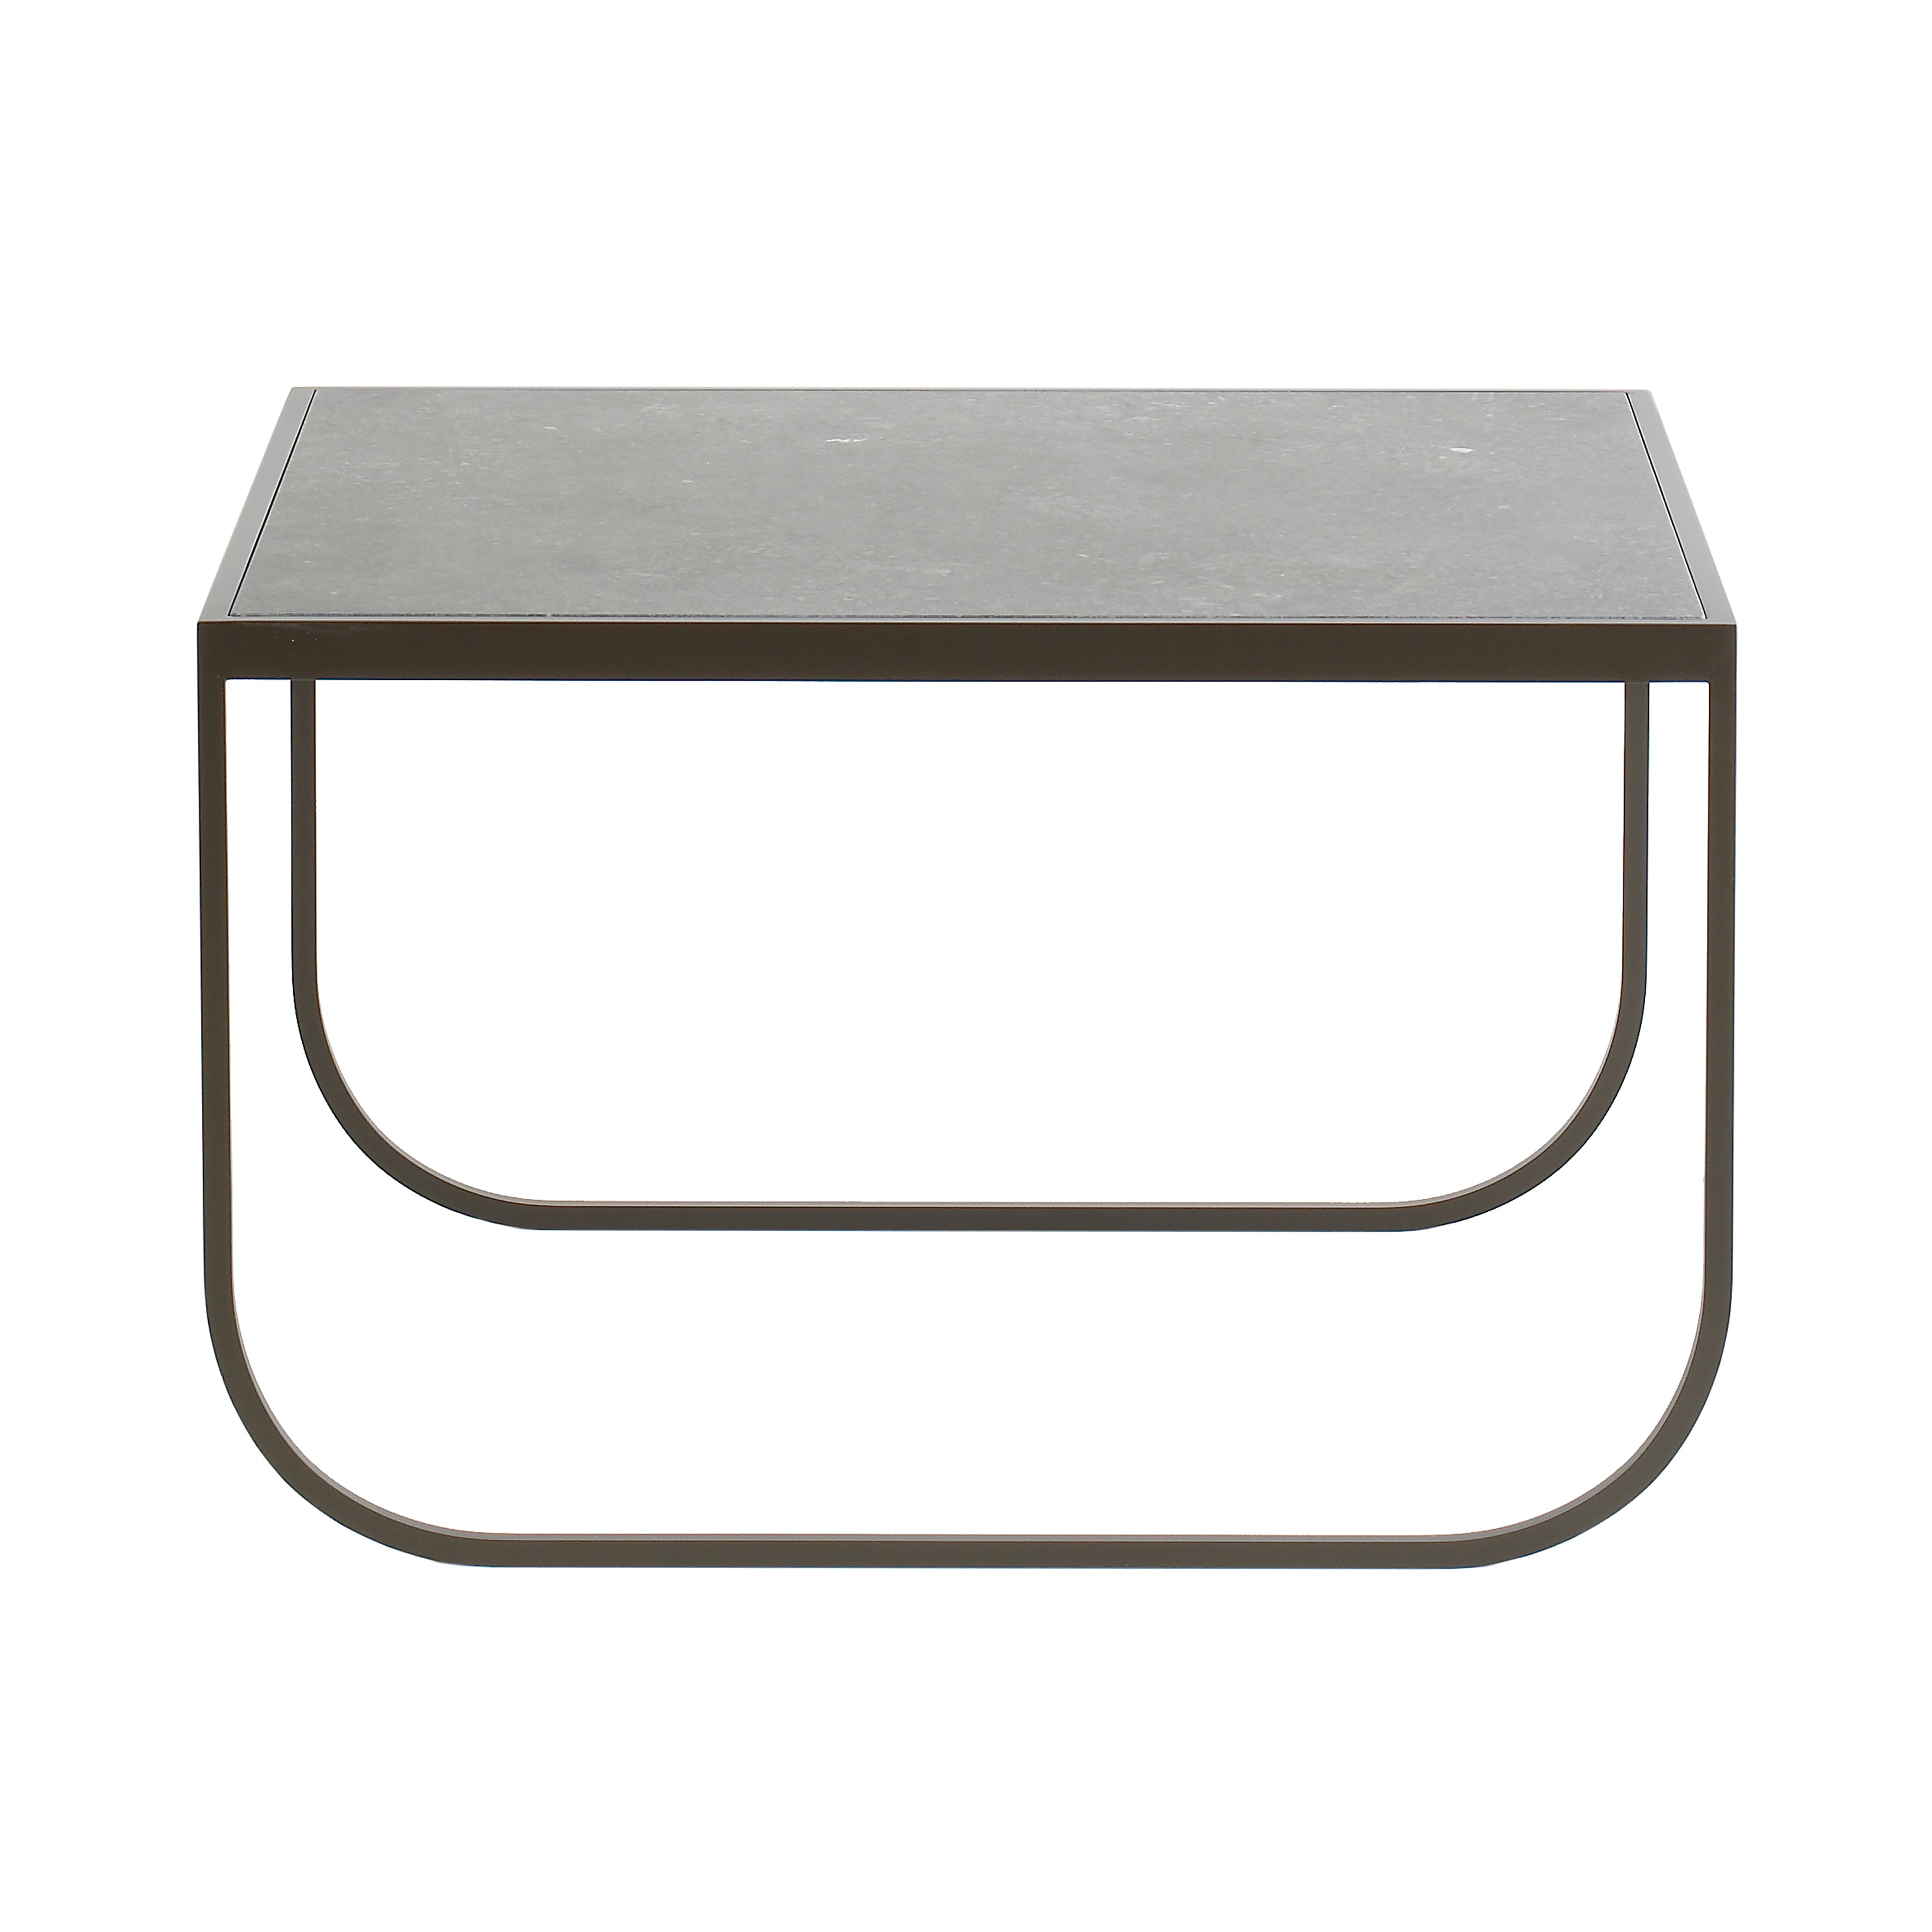 Tati Coffee Table: Square + Stone Top + High + Bronze